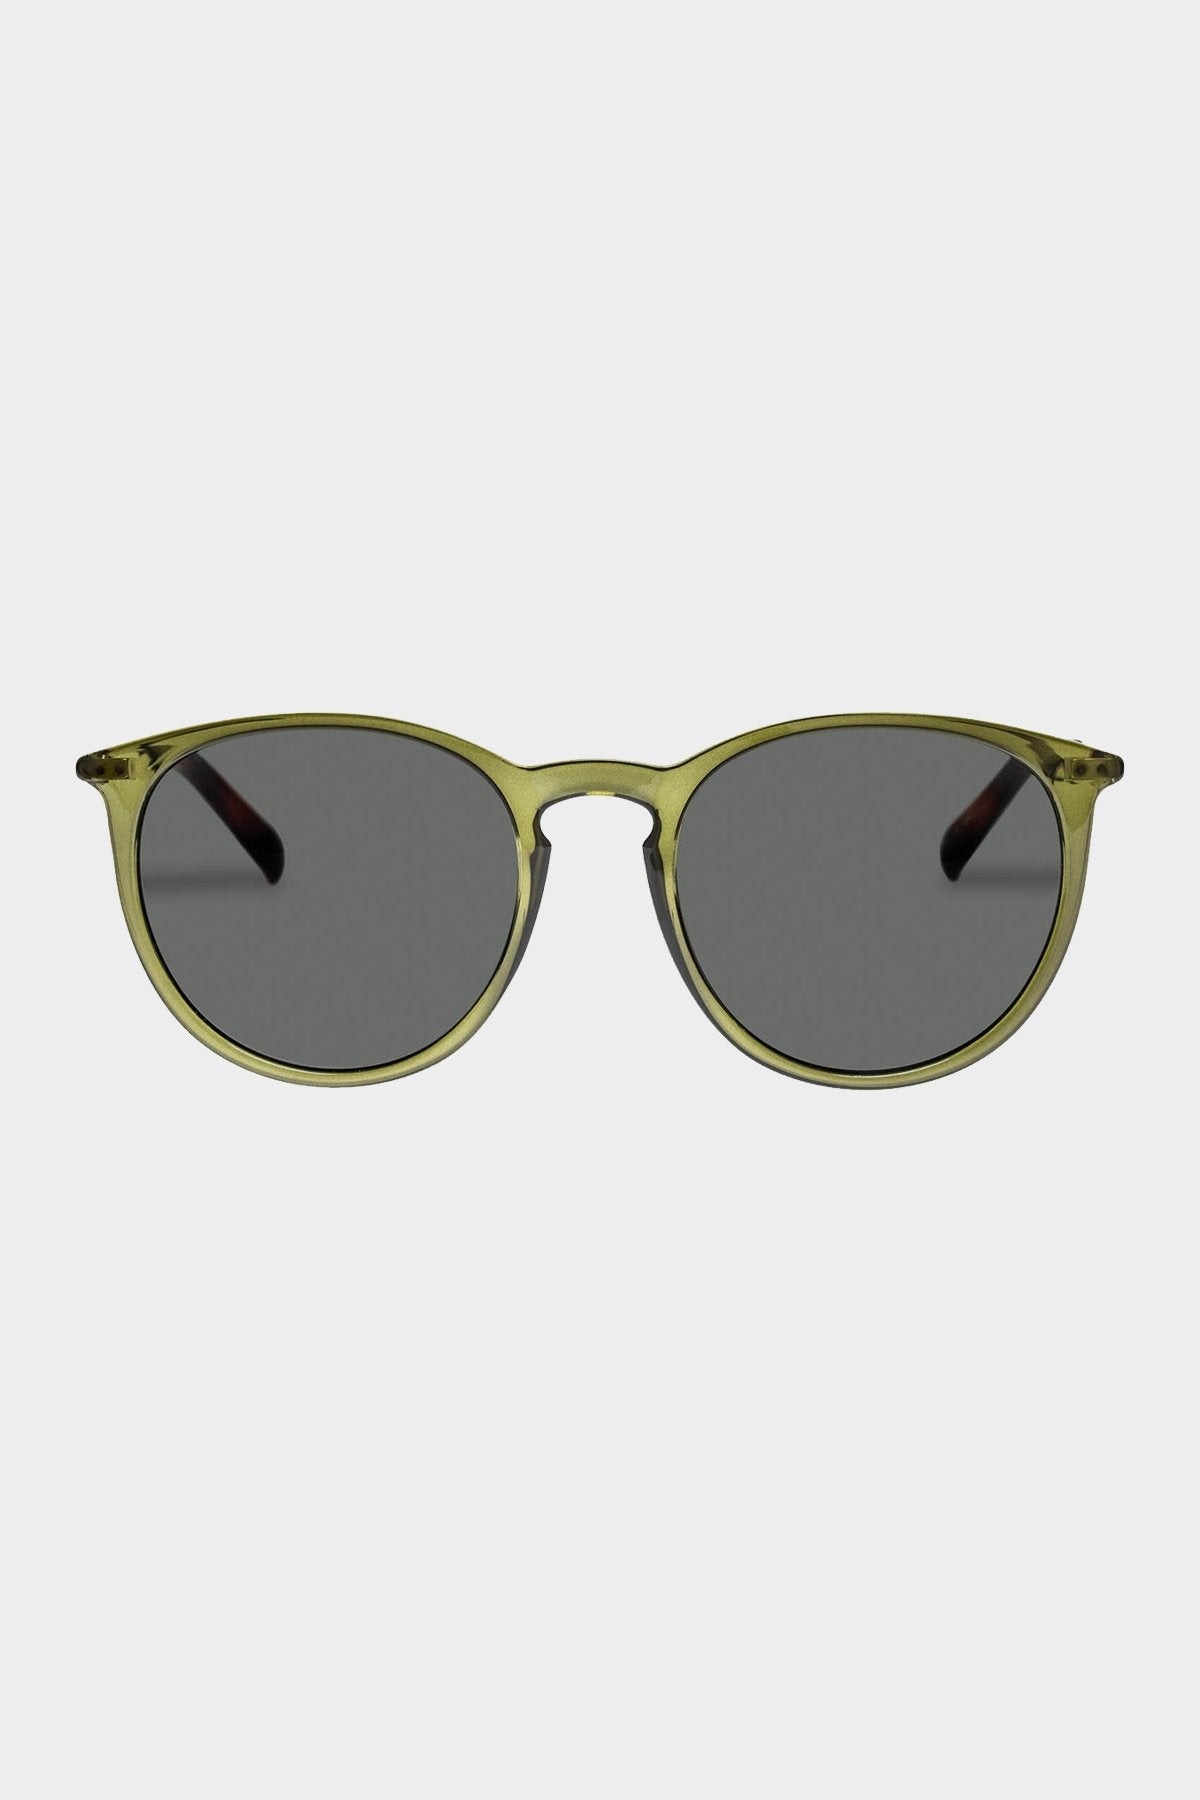 Oh Buoy Sunglasses in Khaki Gold - shop-olivia.com